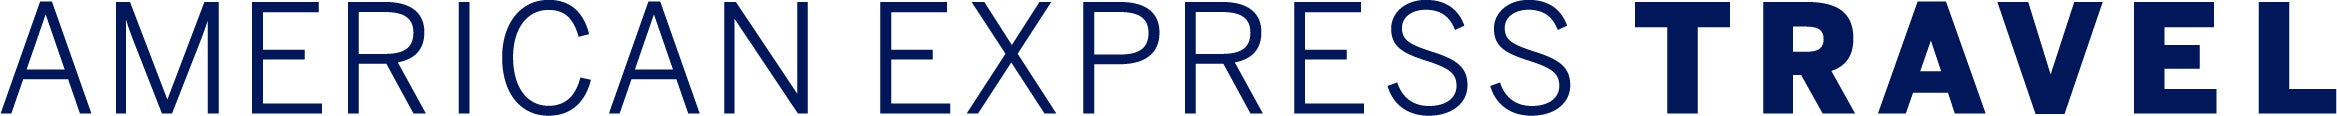 Amex Travel 3 logo